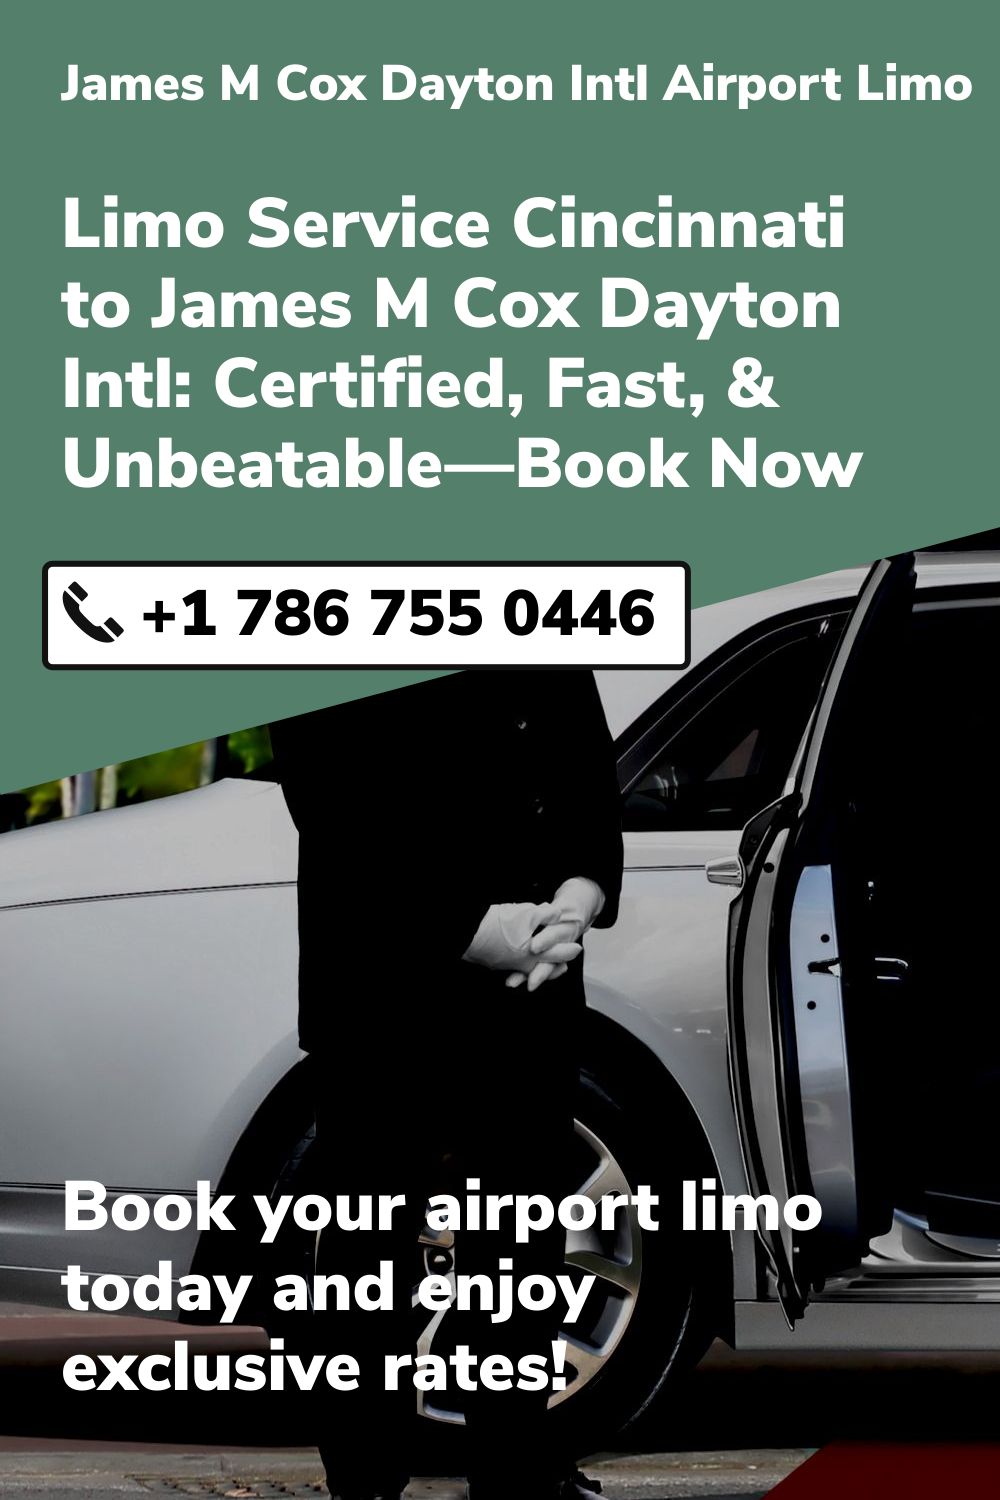 James M Cox Dayton Intl Airport Limo